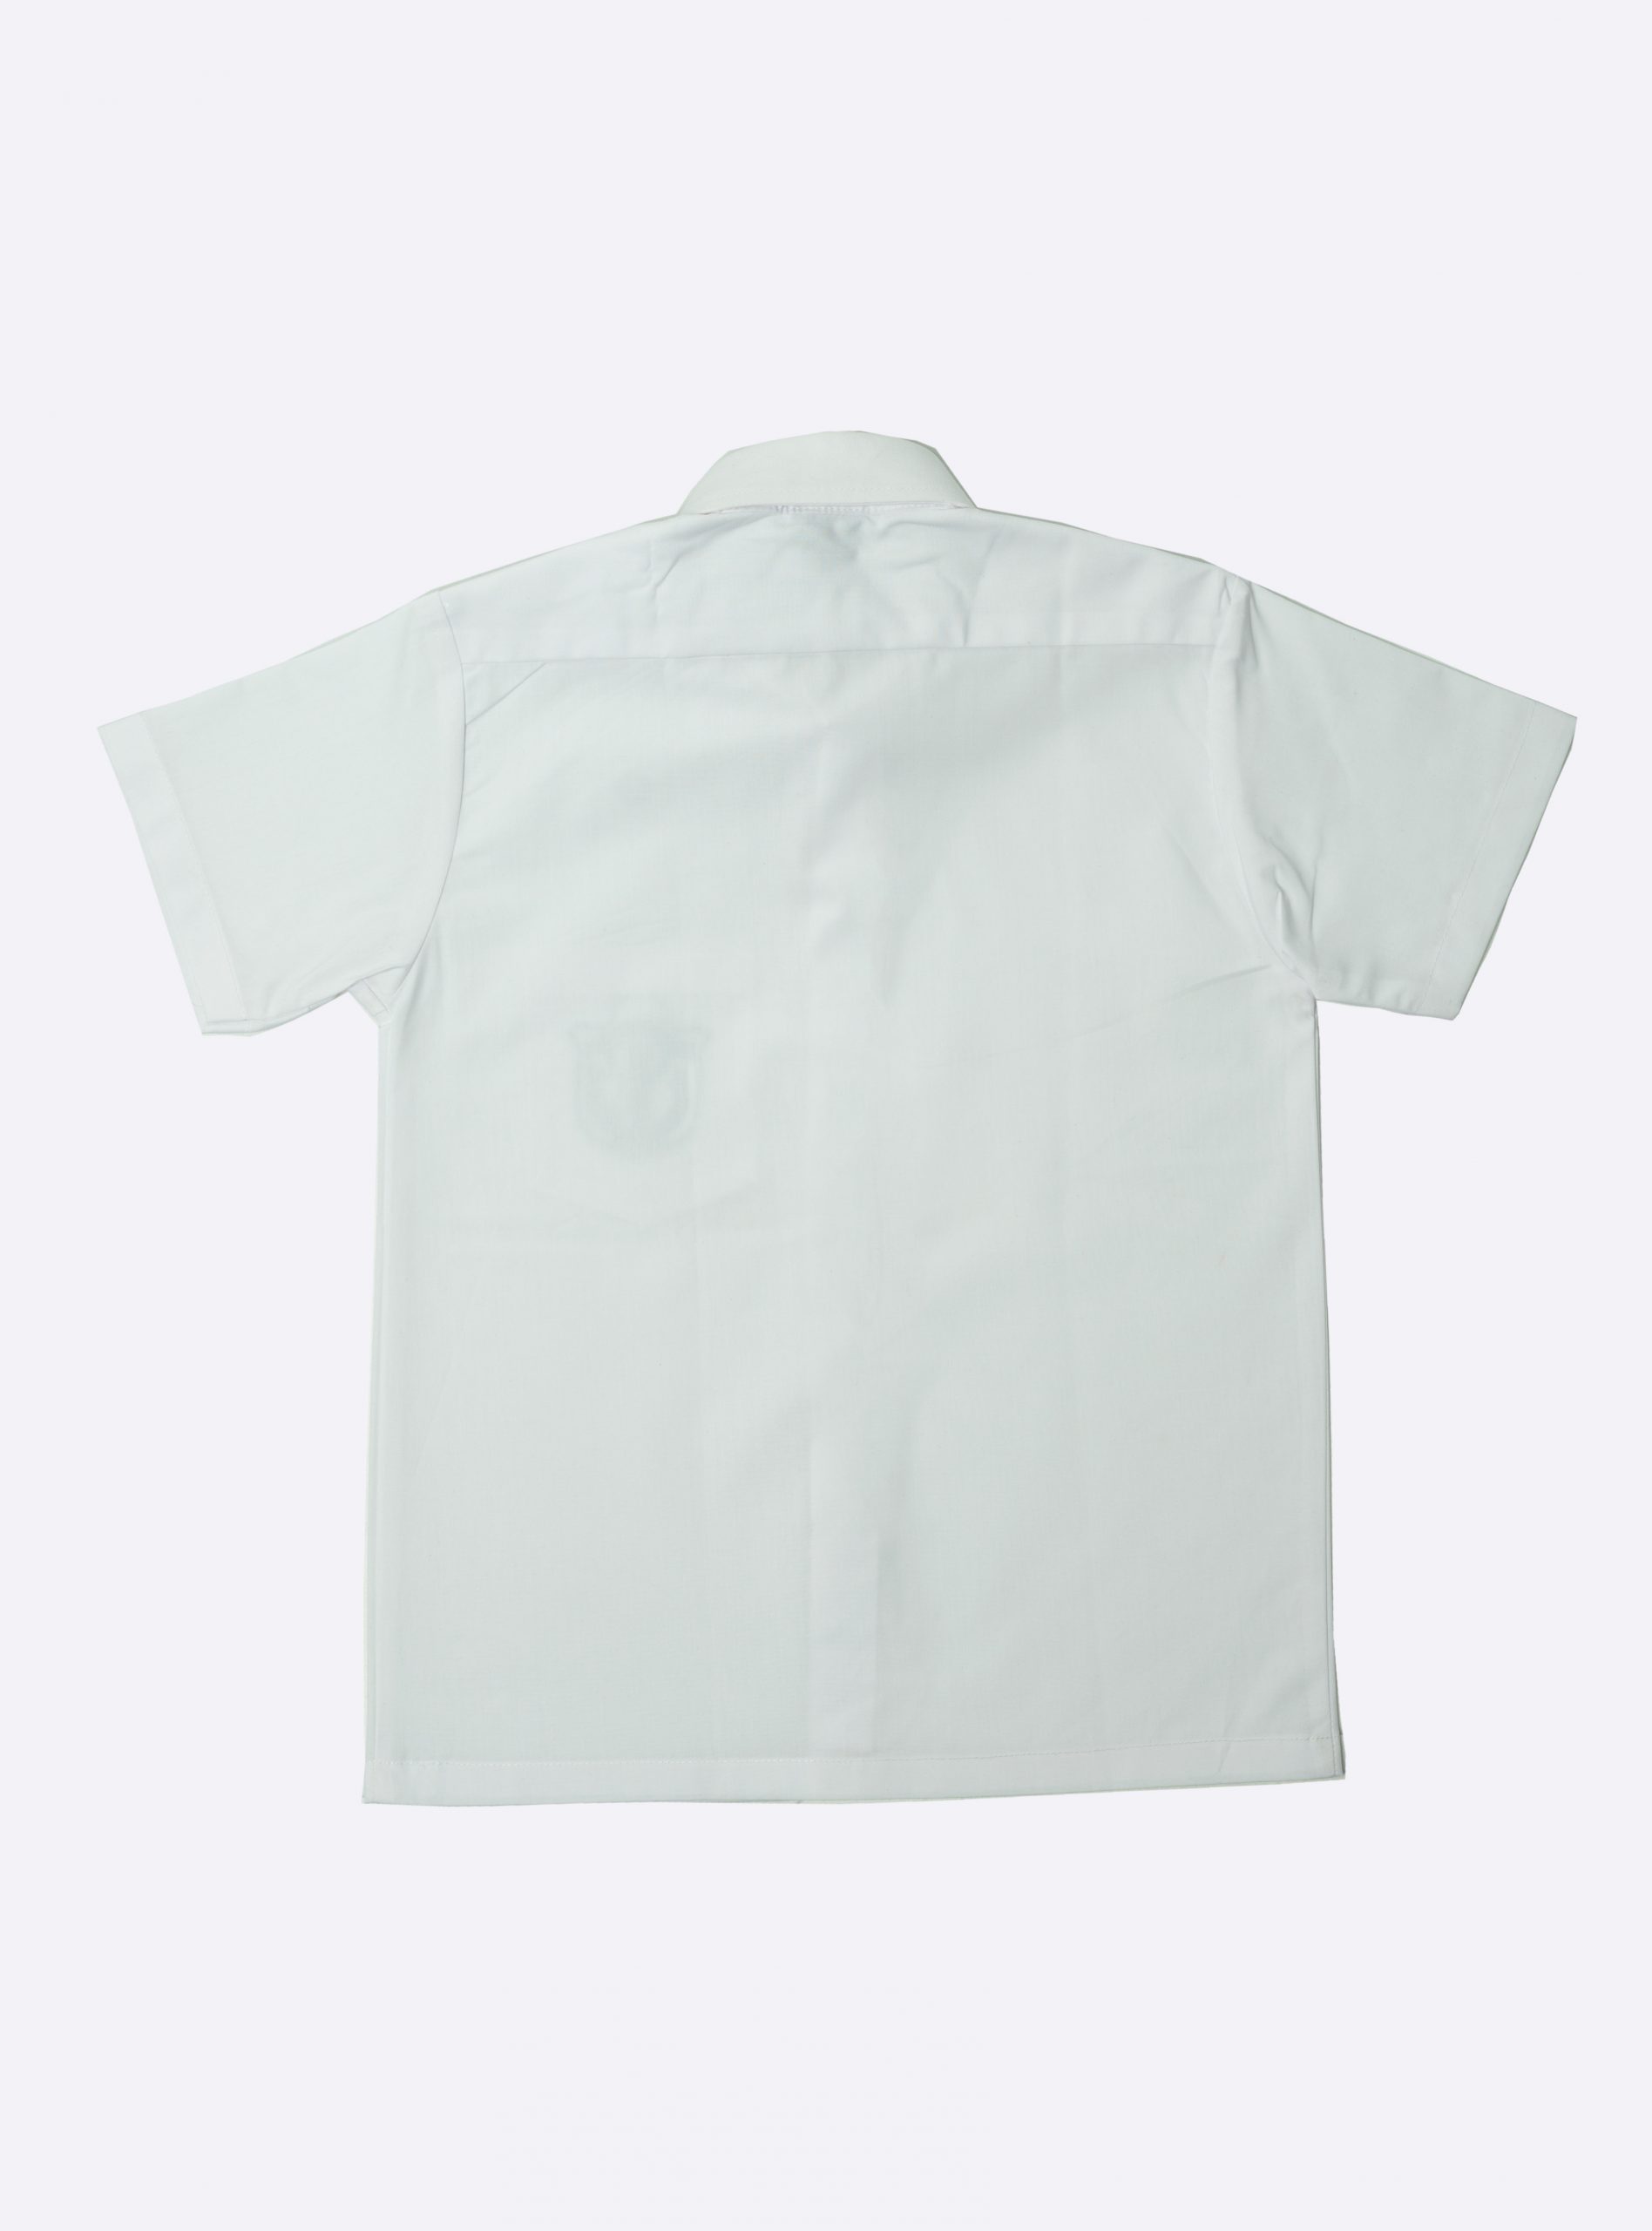 White Shirts uniform